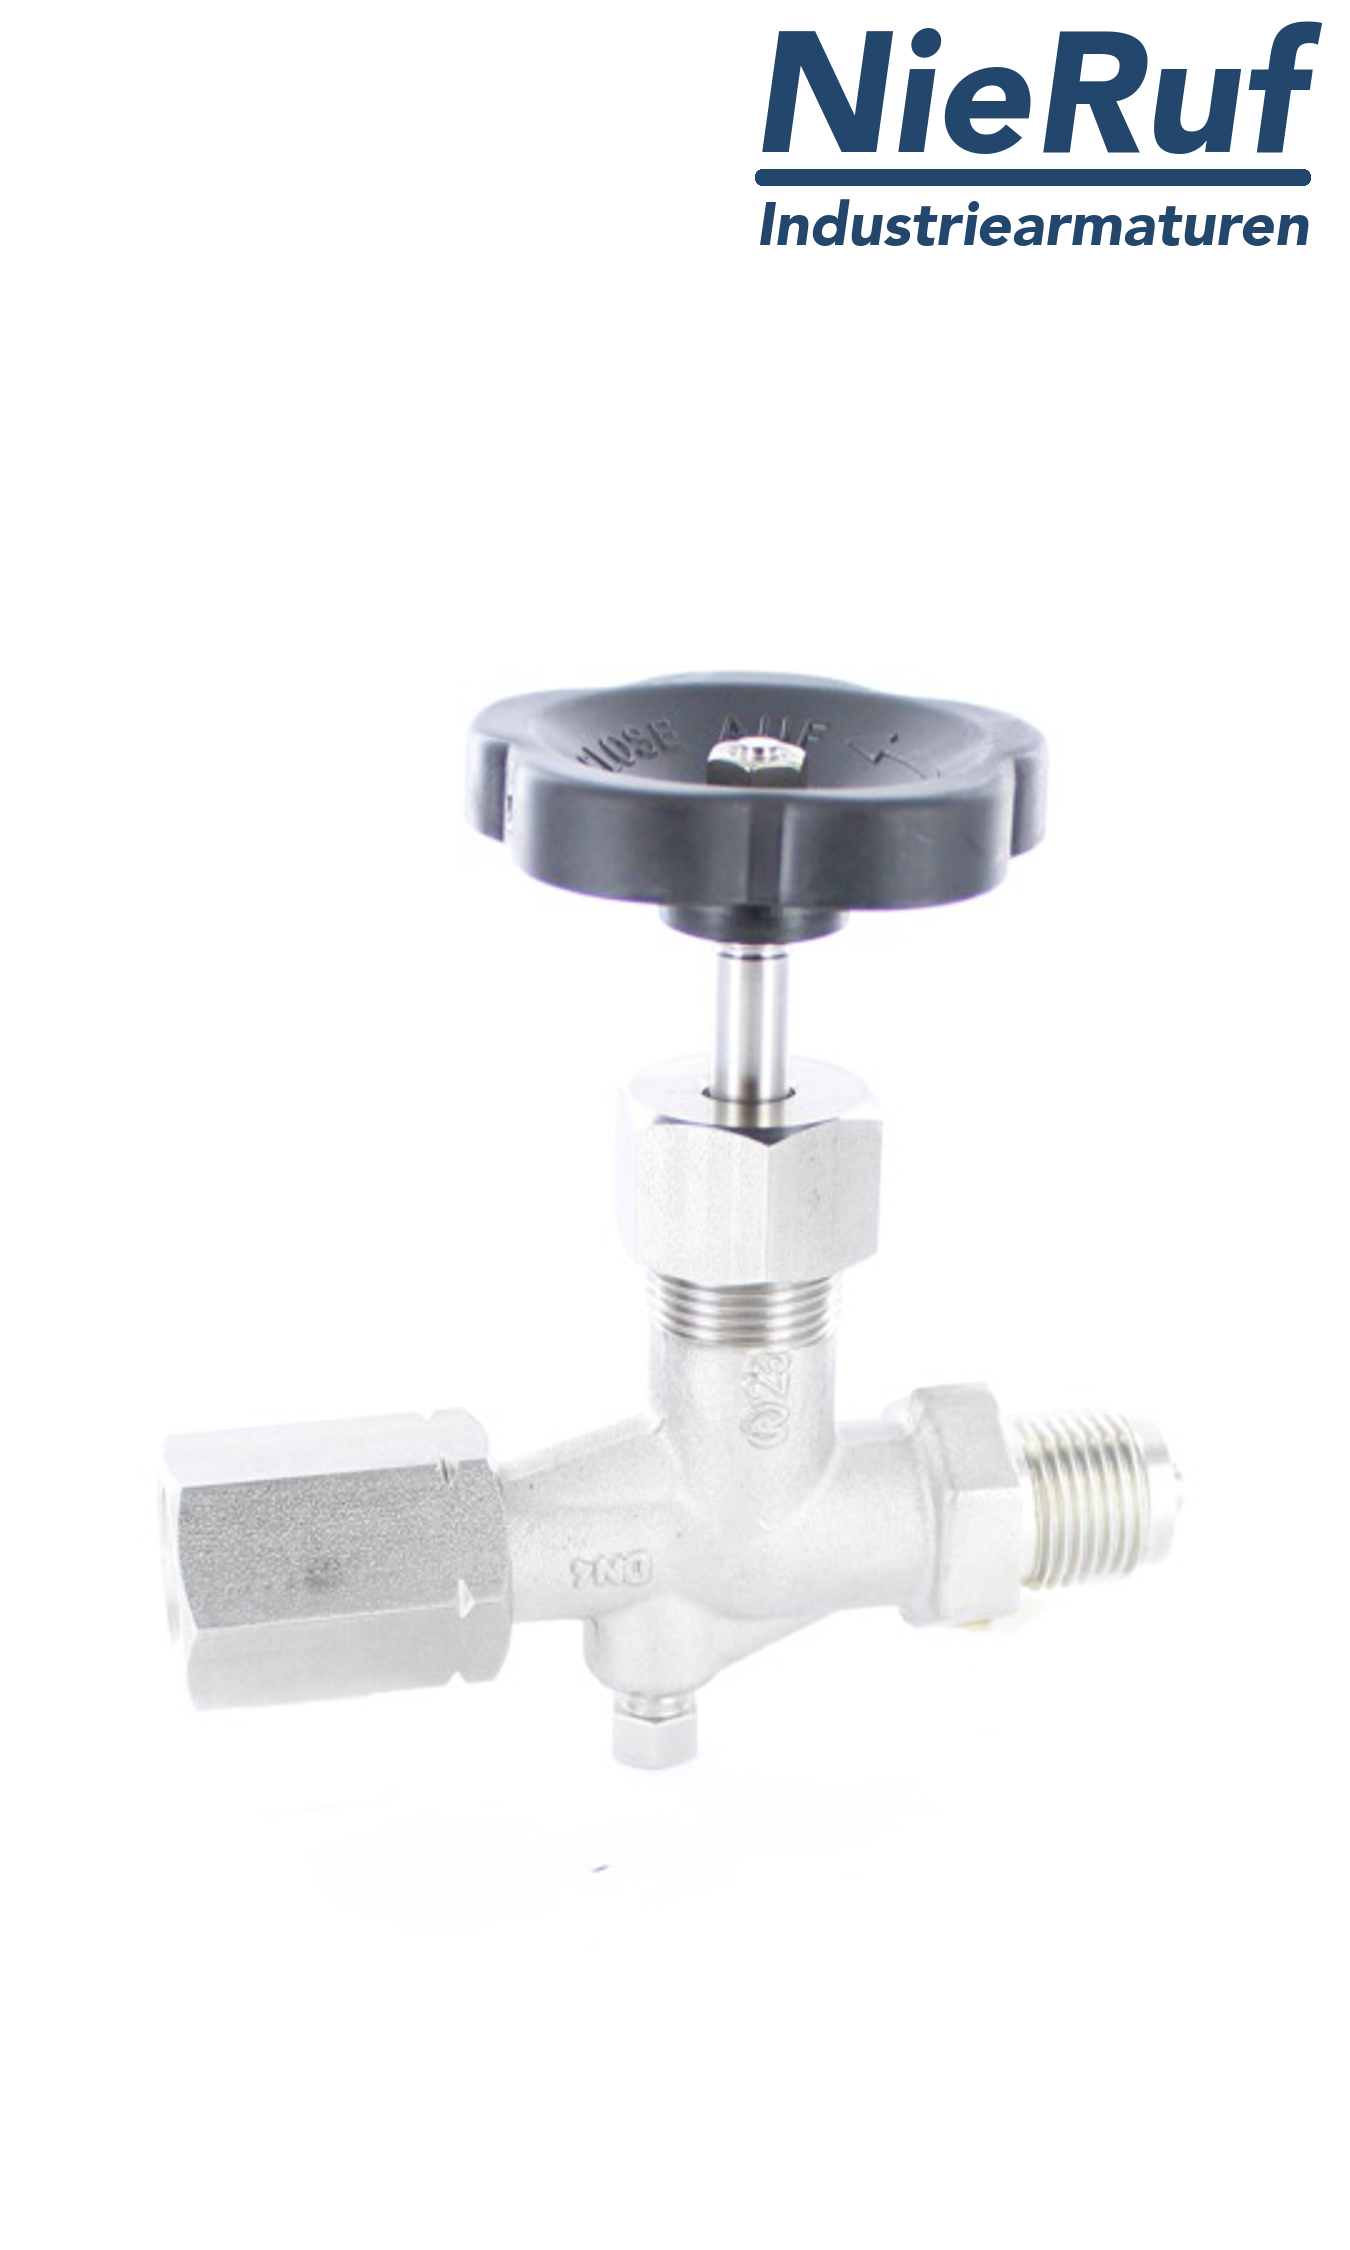 manometer gauge valves male thread x sleeve DIN 16270 stainless steel 1.4571 400 bar